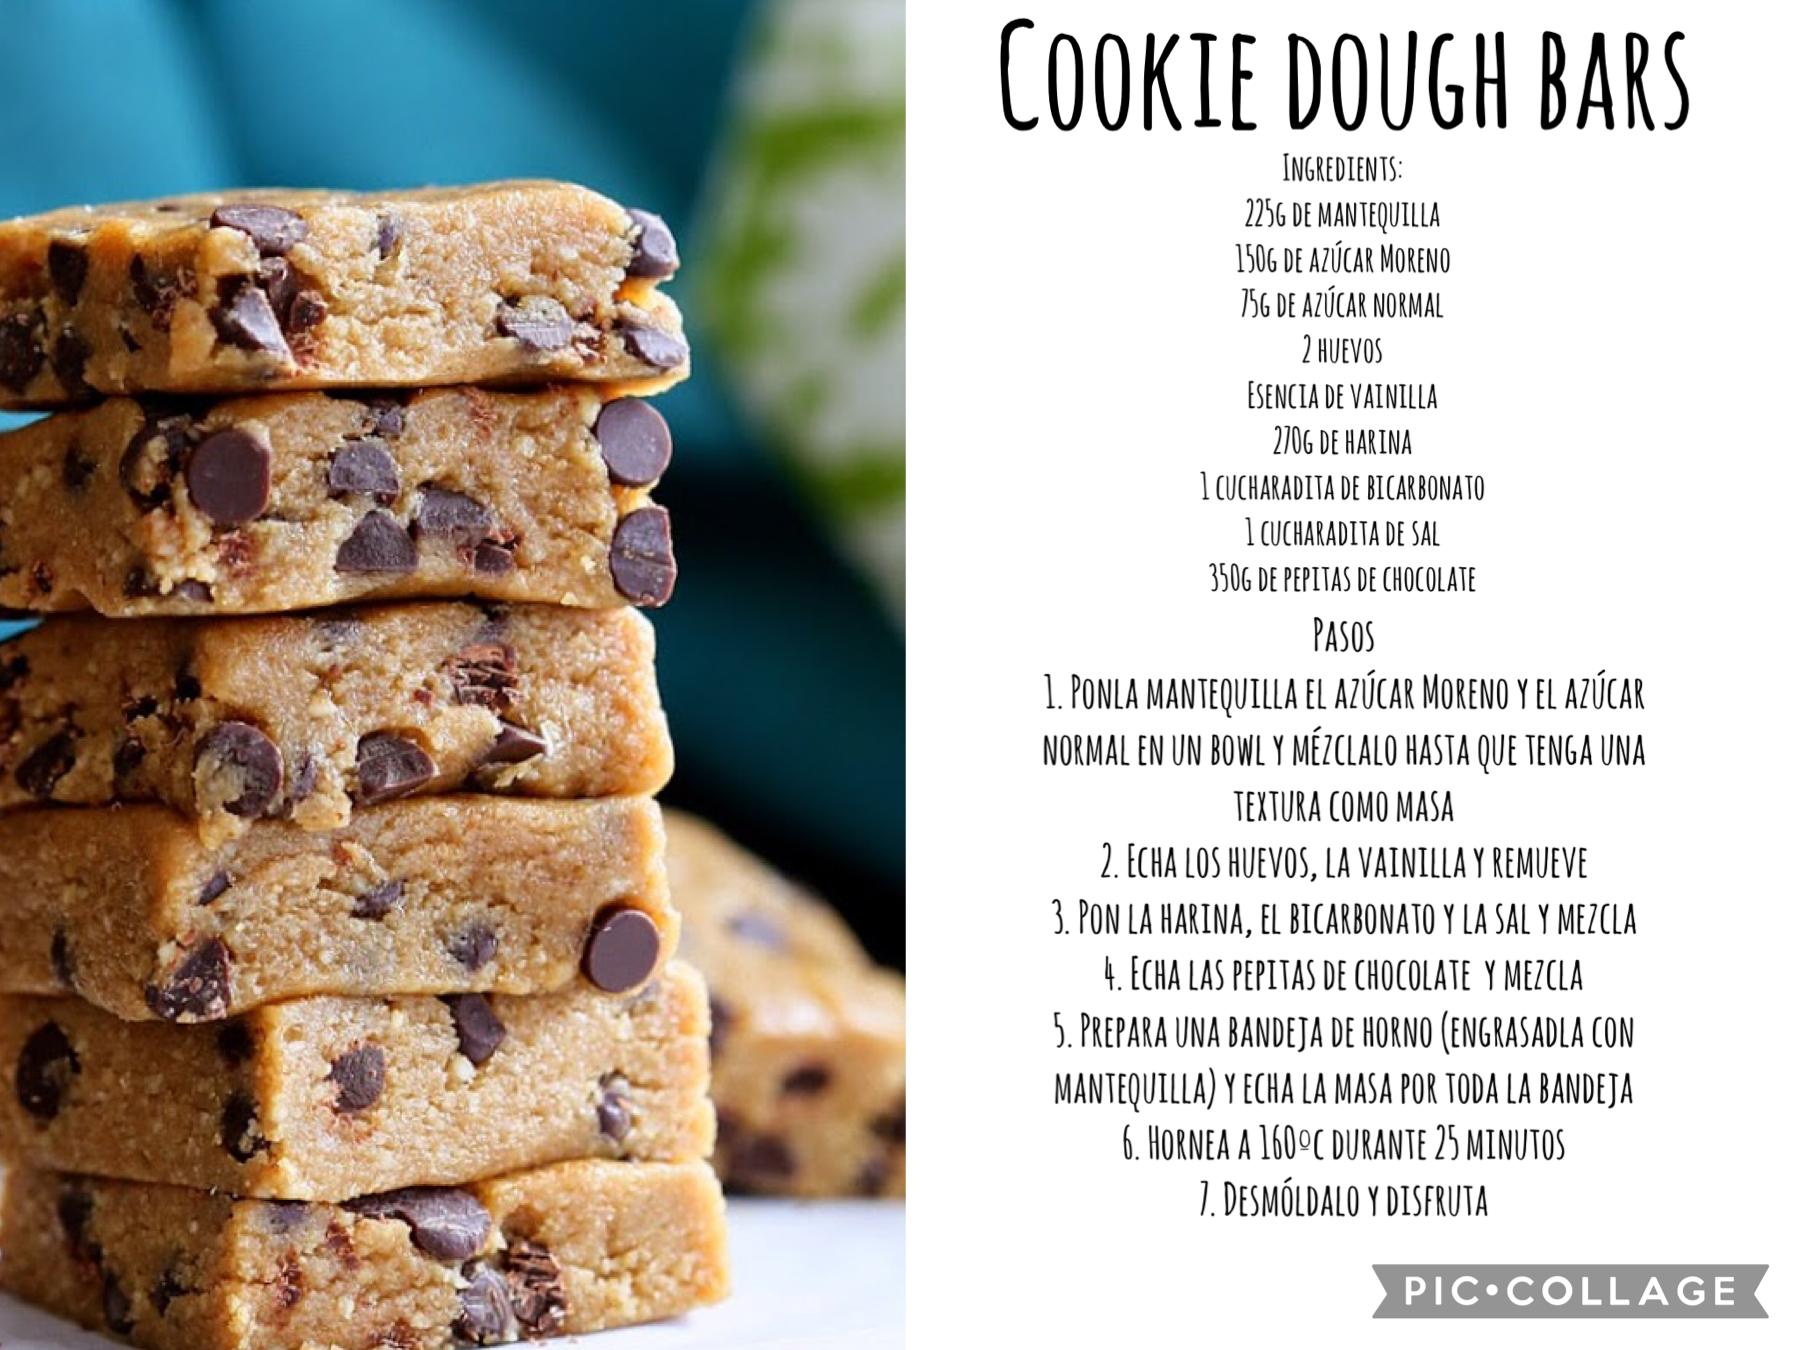 Cookie dough bars